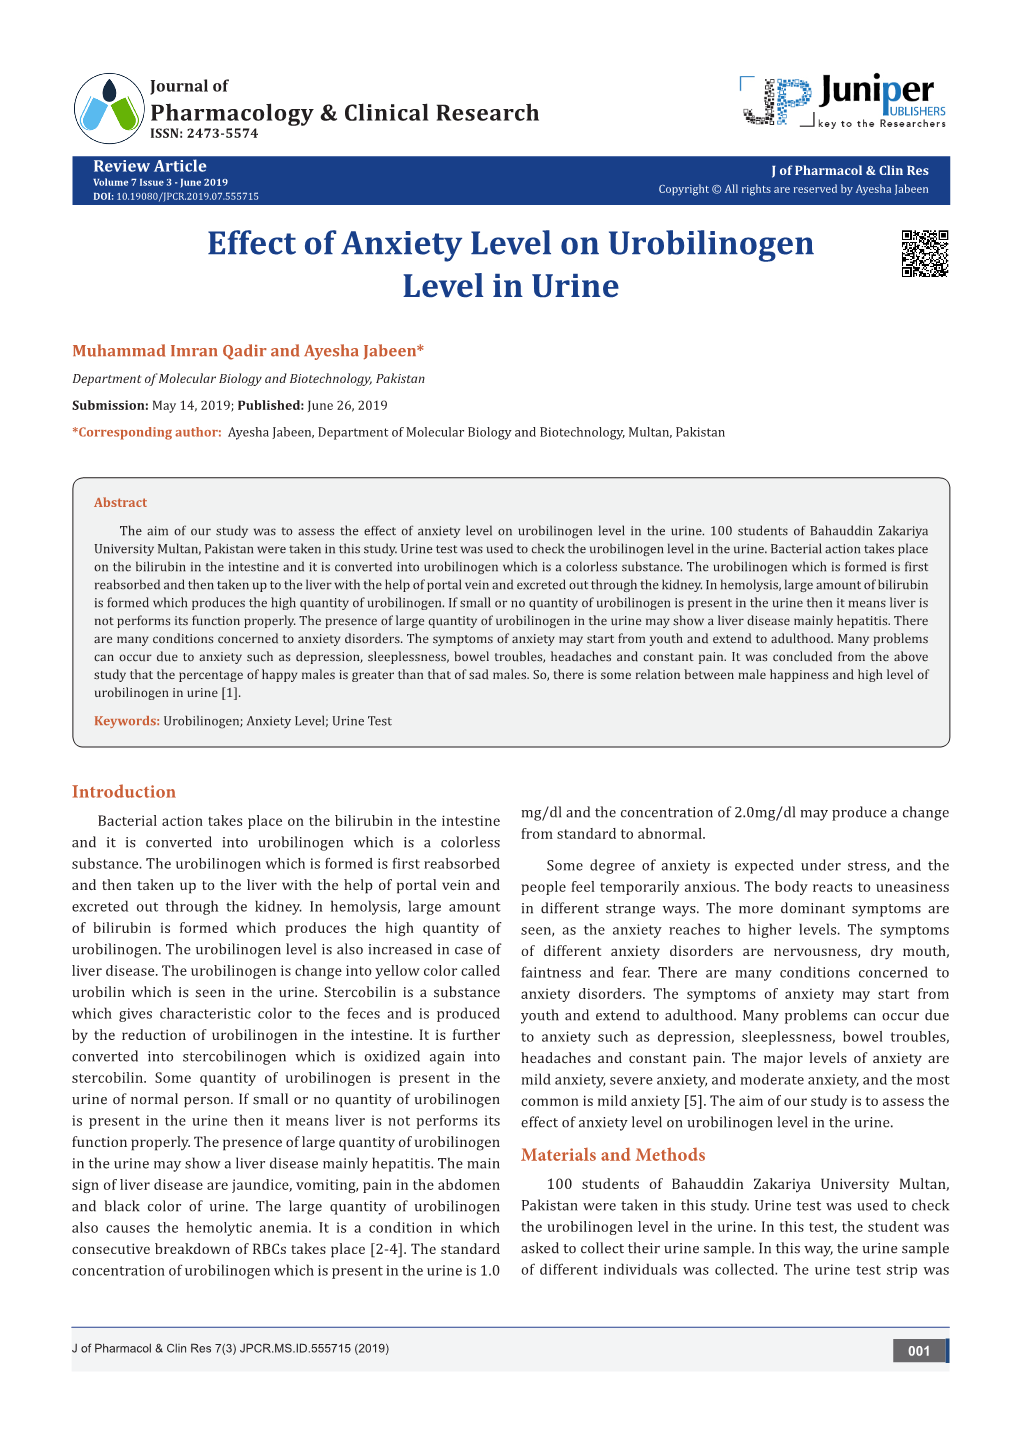 Effect of Anxiety Level on Urobilinogen Level in Urine